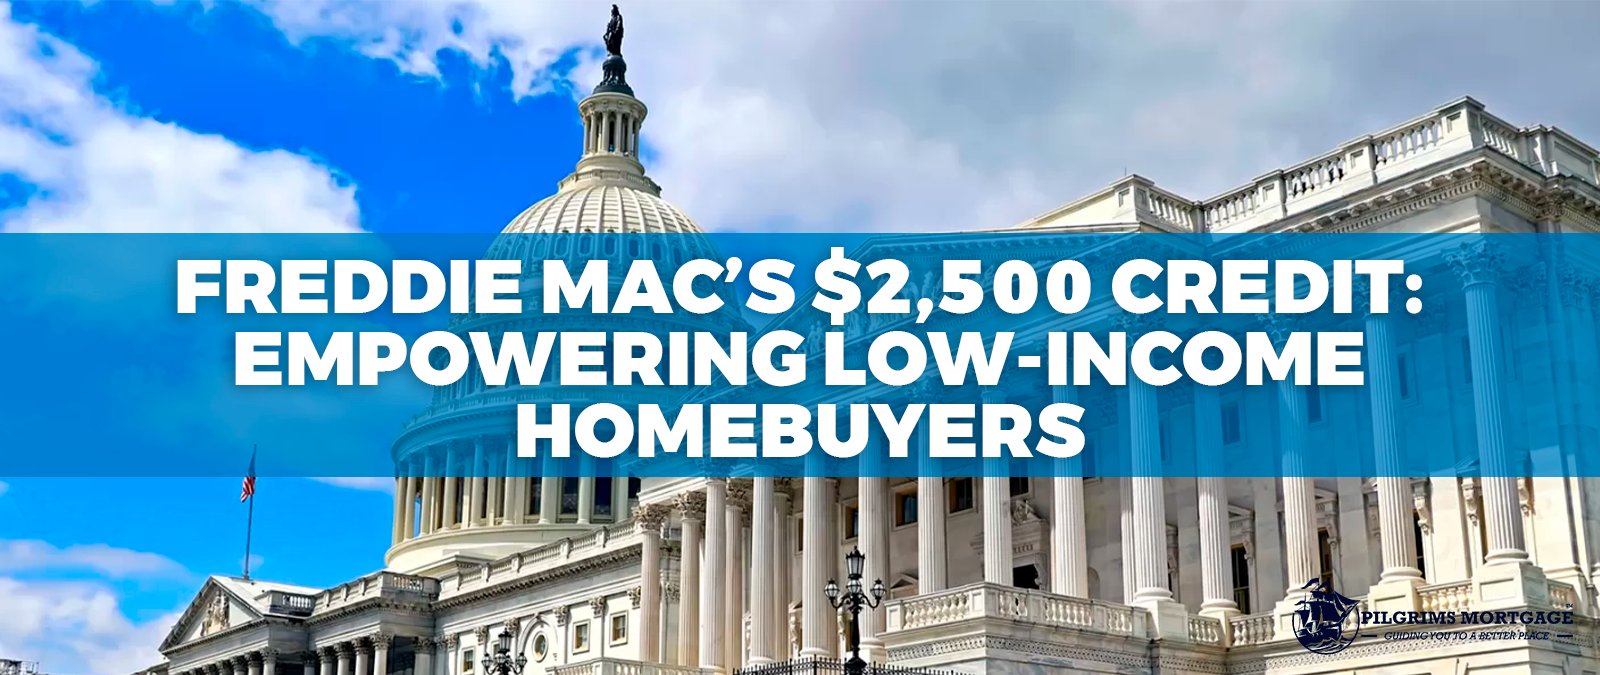 Freddie Mac's $2,500 Credit: Empowering Low-Income Homebuyers